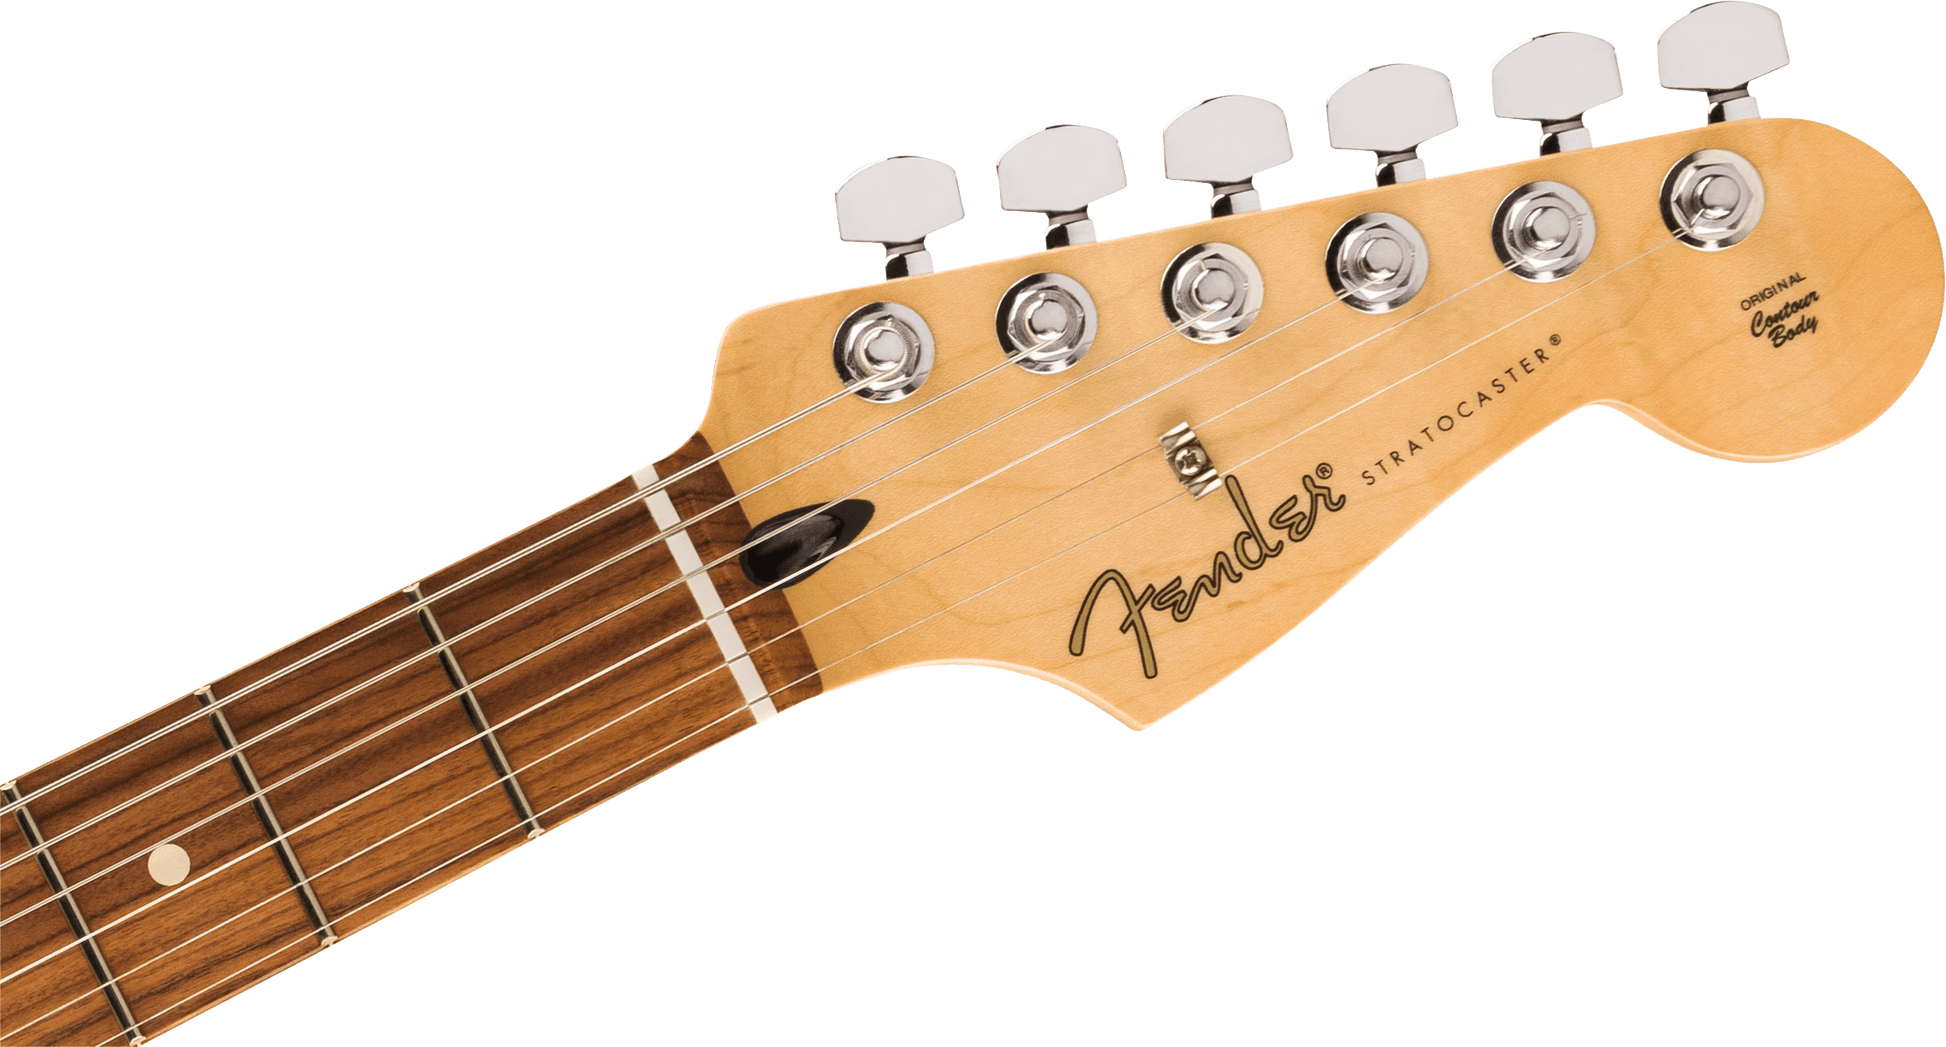 Player Stratocaster Anniversary Model Electric Guitar - 2-Color Sunburst - Joondalup Music Centre